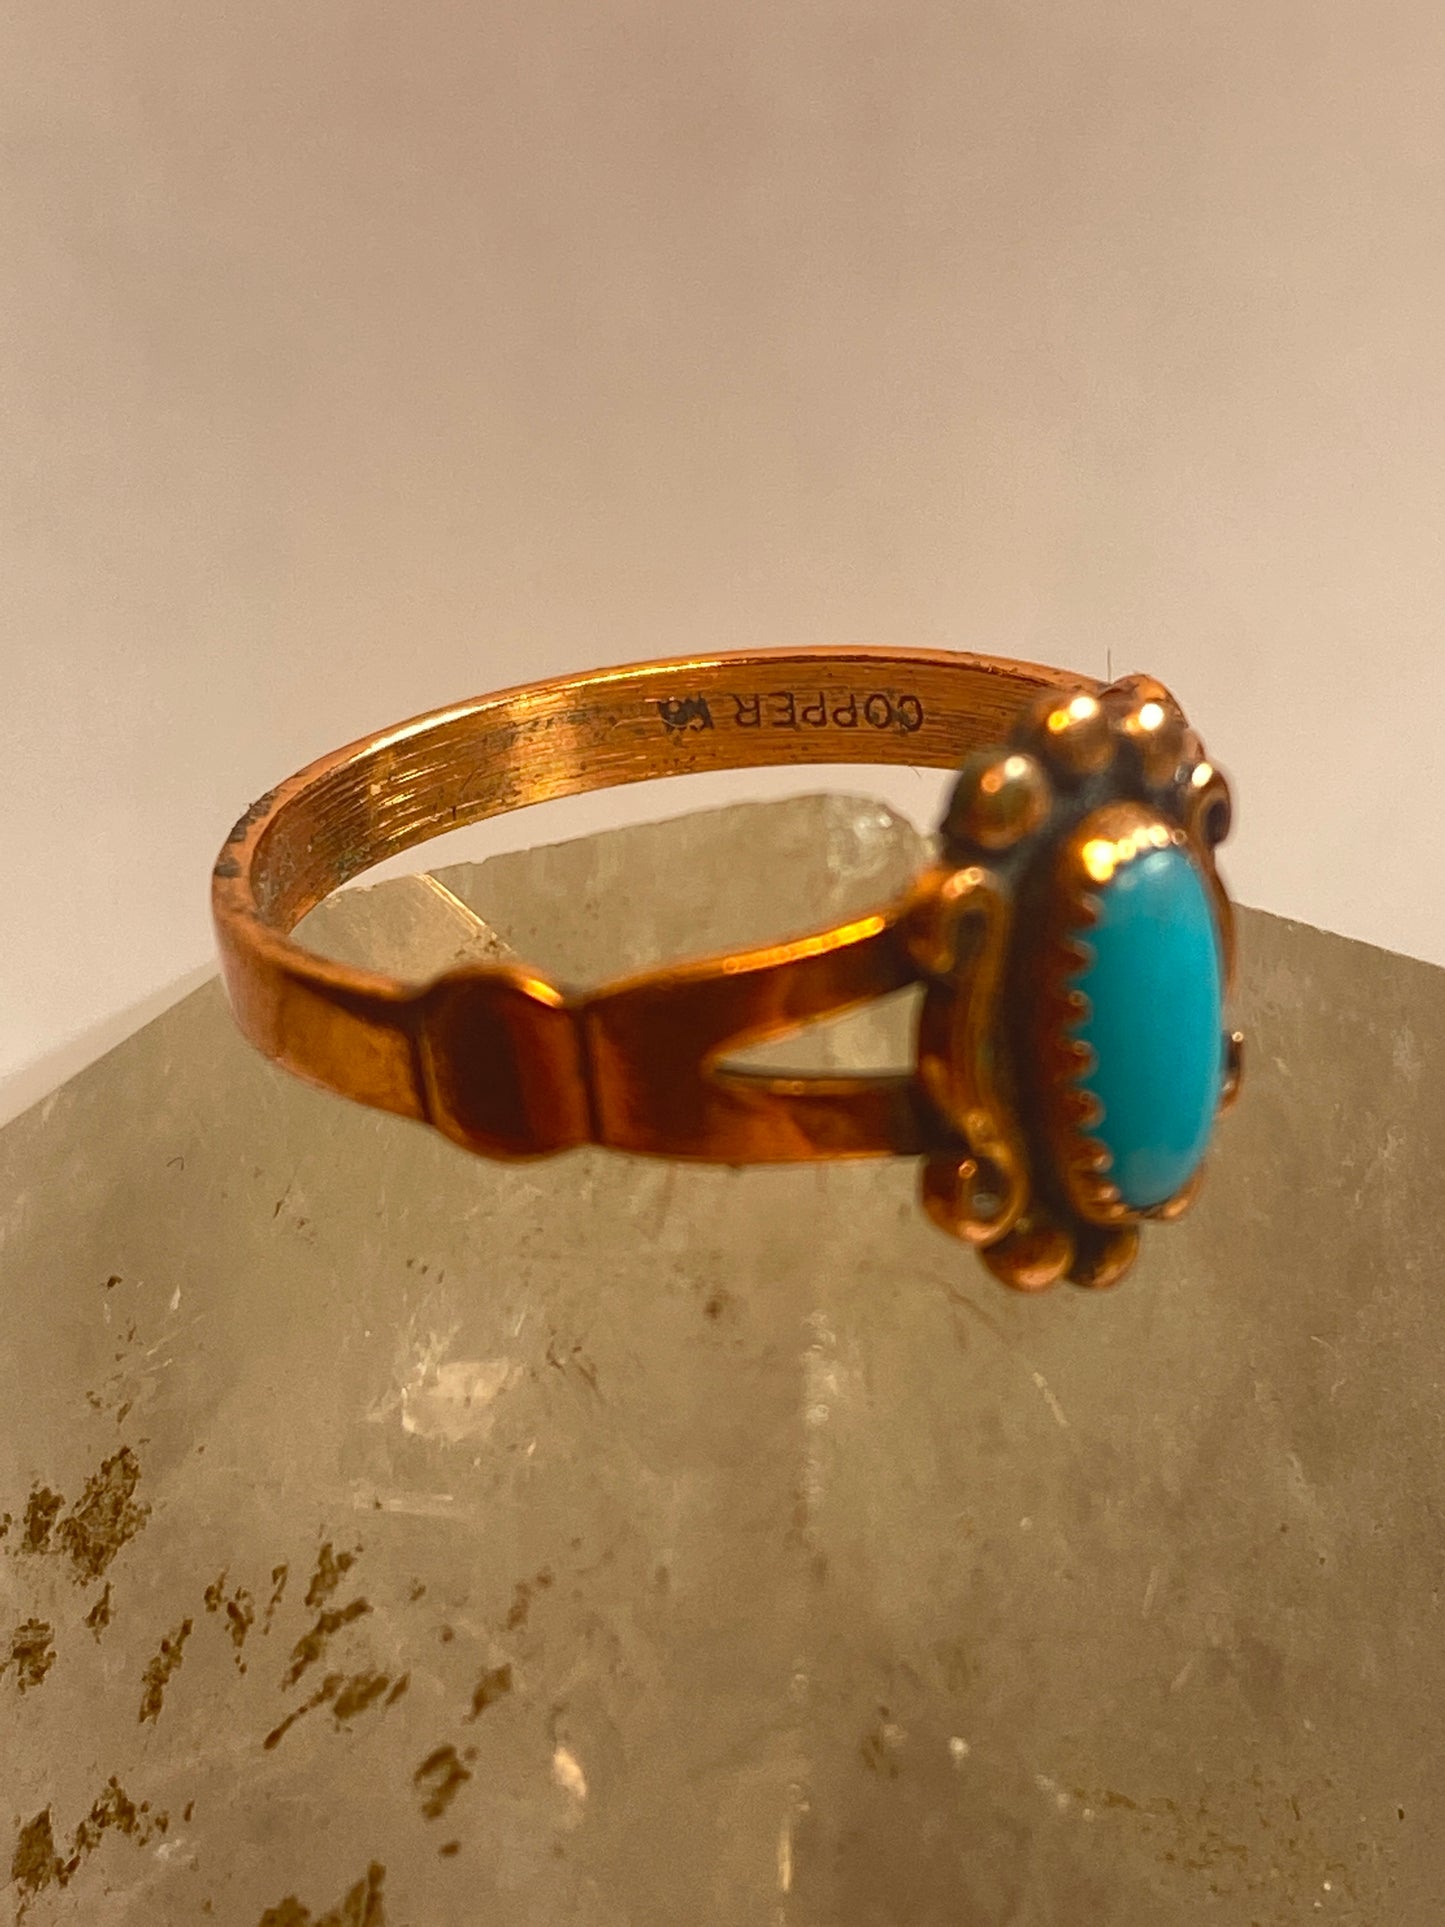 Turquoise ring size 7.75 simulated turquoise southwest copper girls women